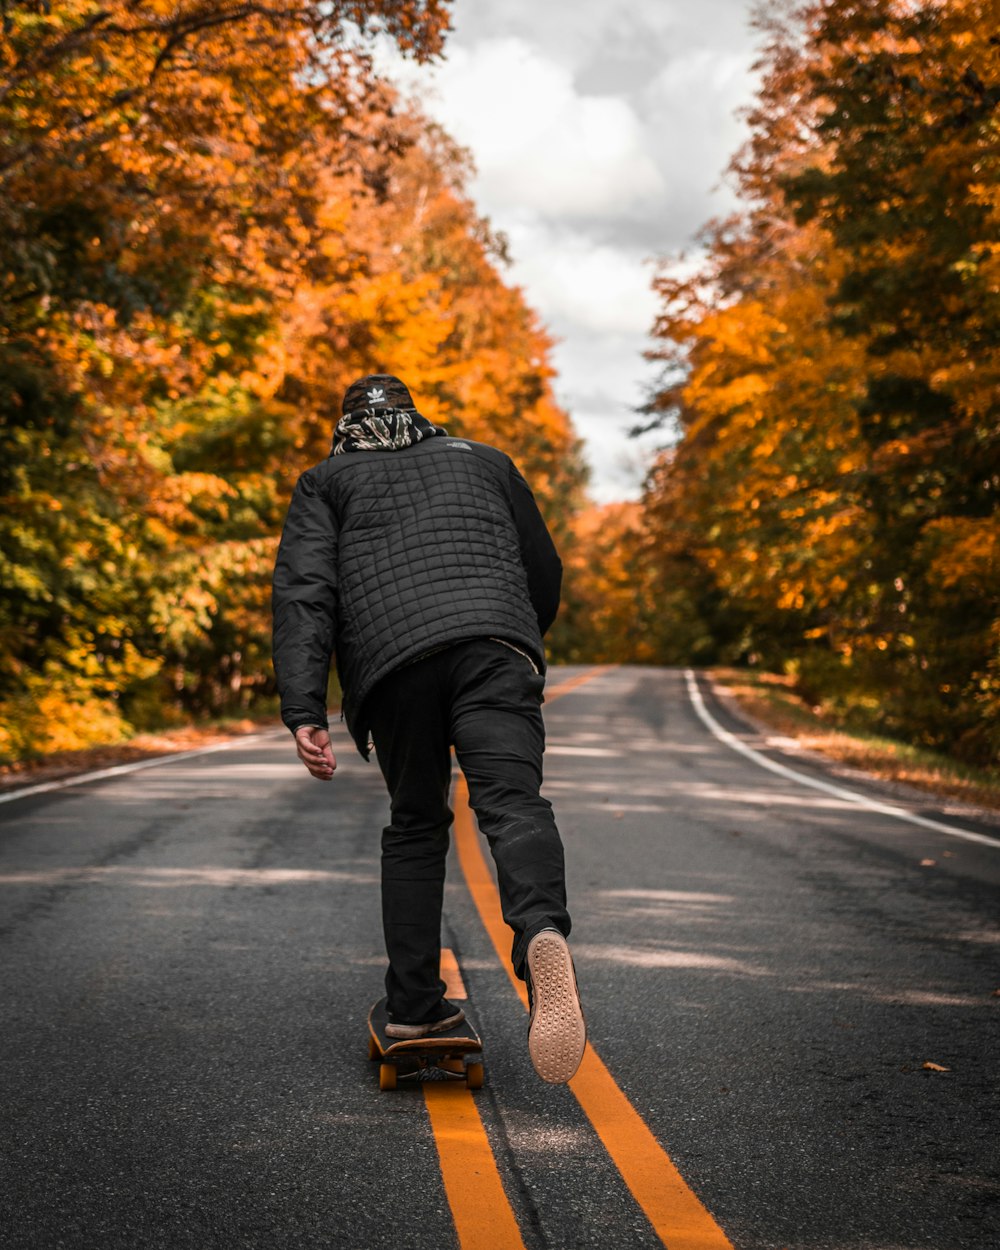 man in black jacket skating on road between yellow trees